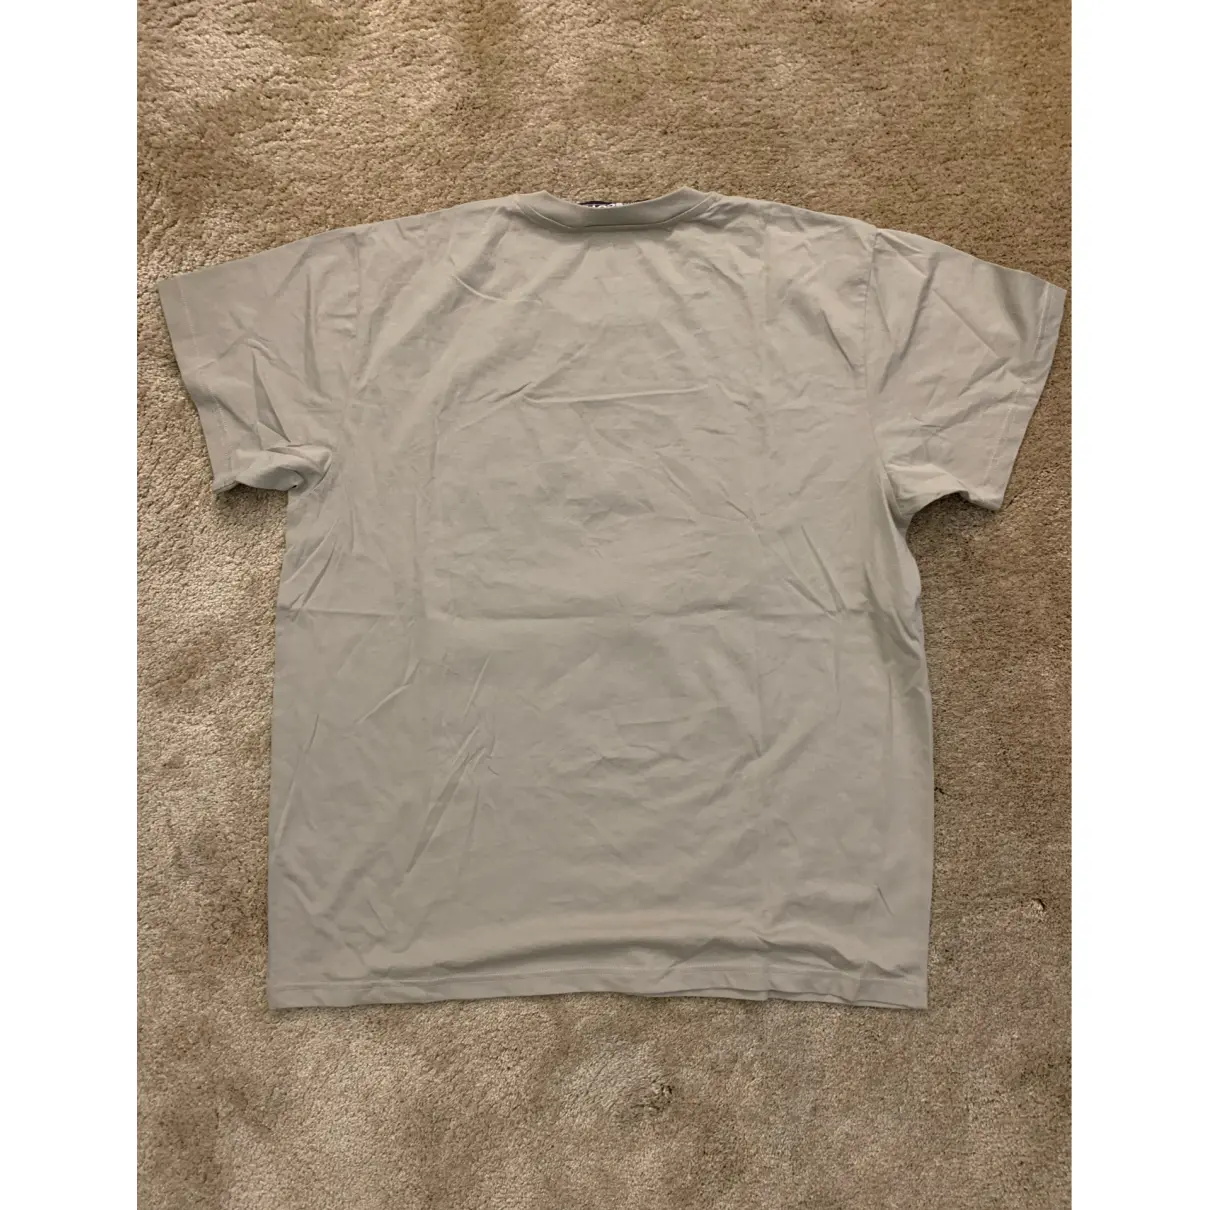 Buy Jeremy Scott T-shirt online